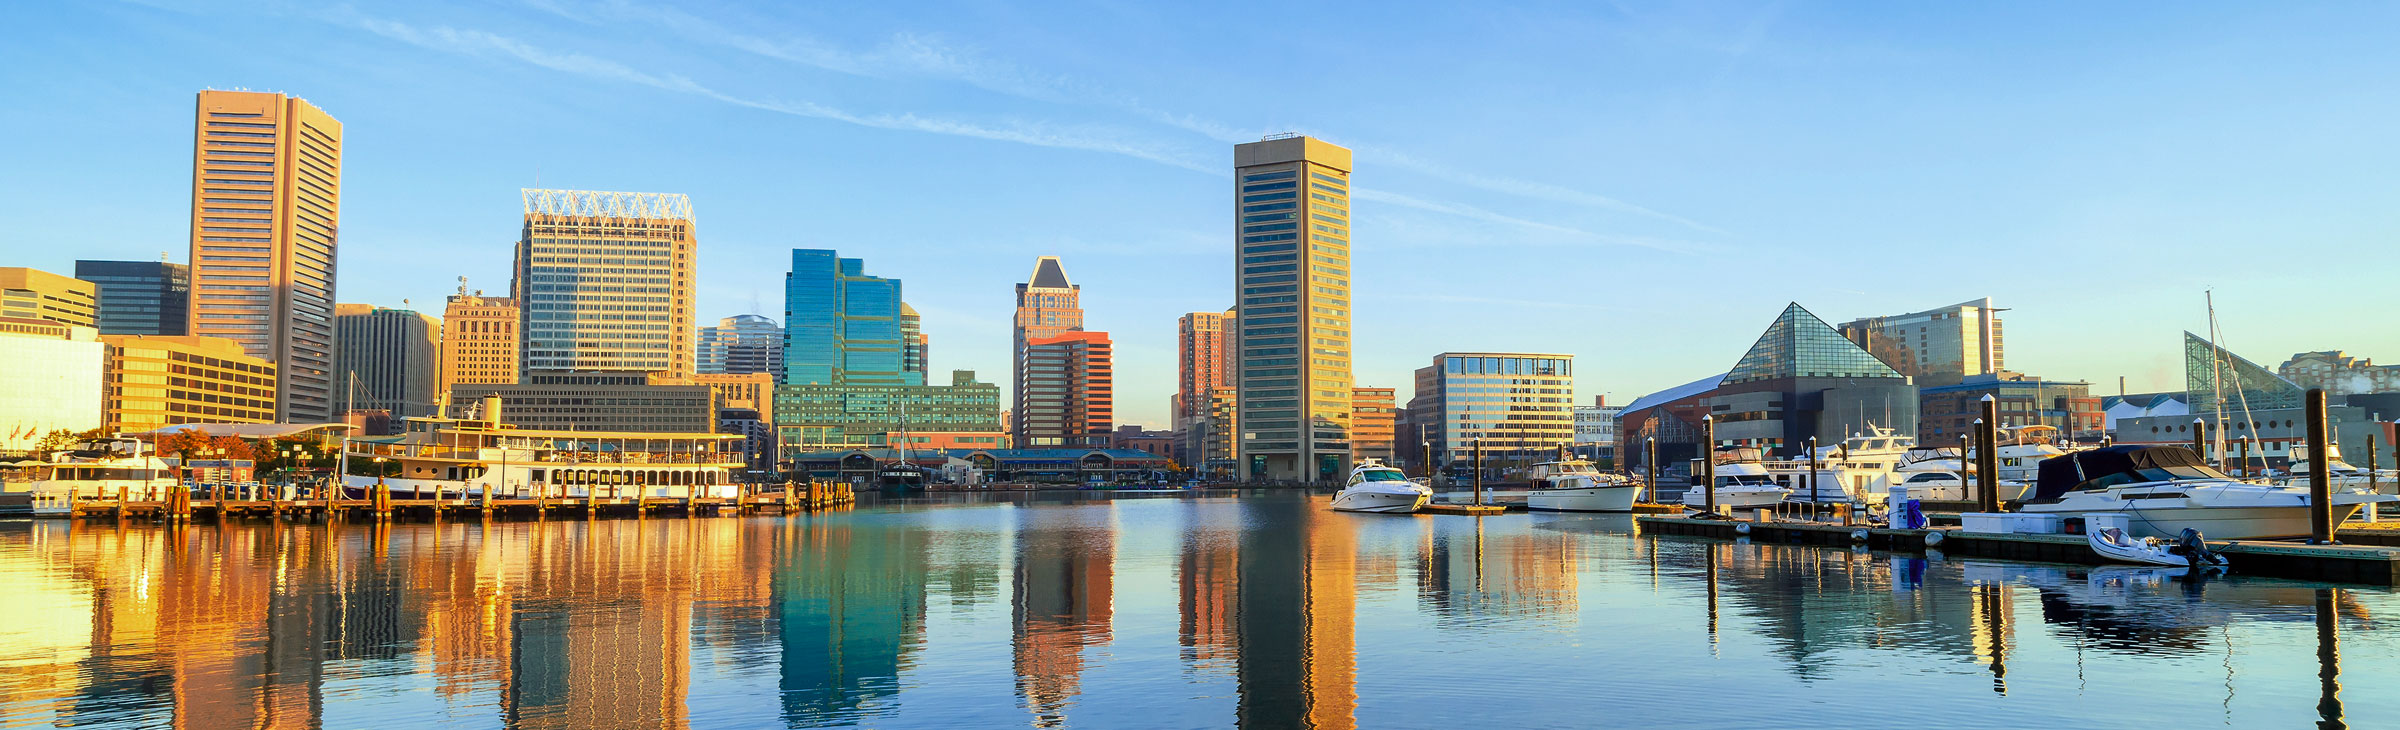 Baltimore-Skyline